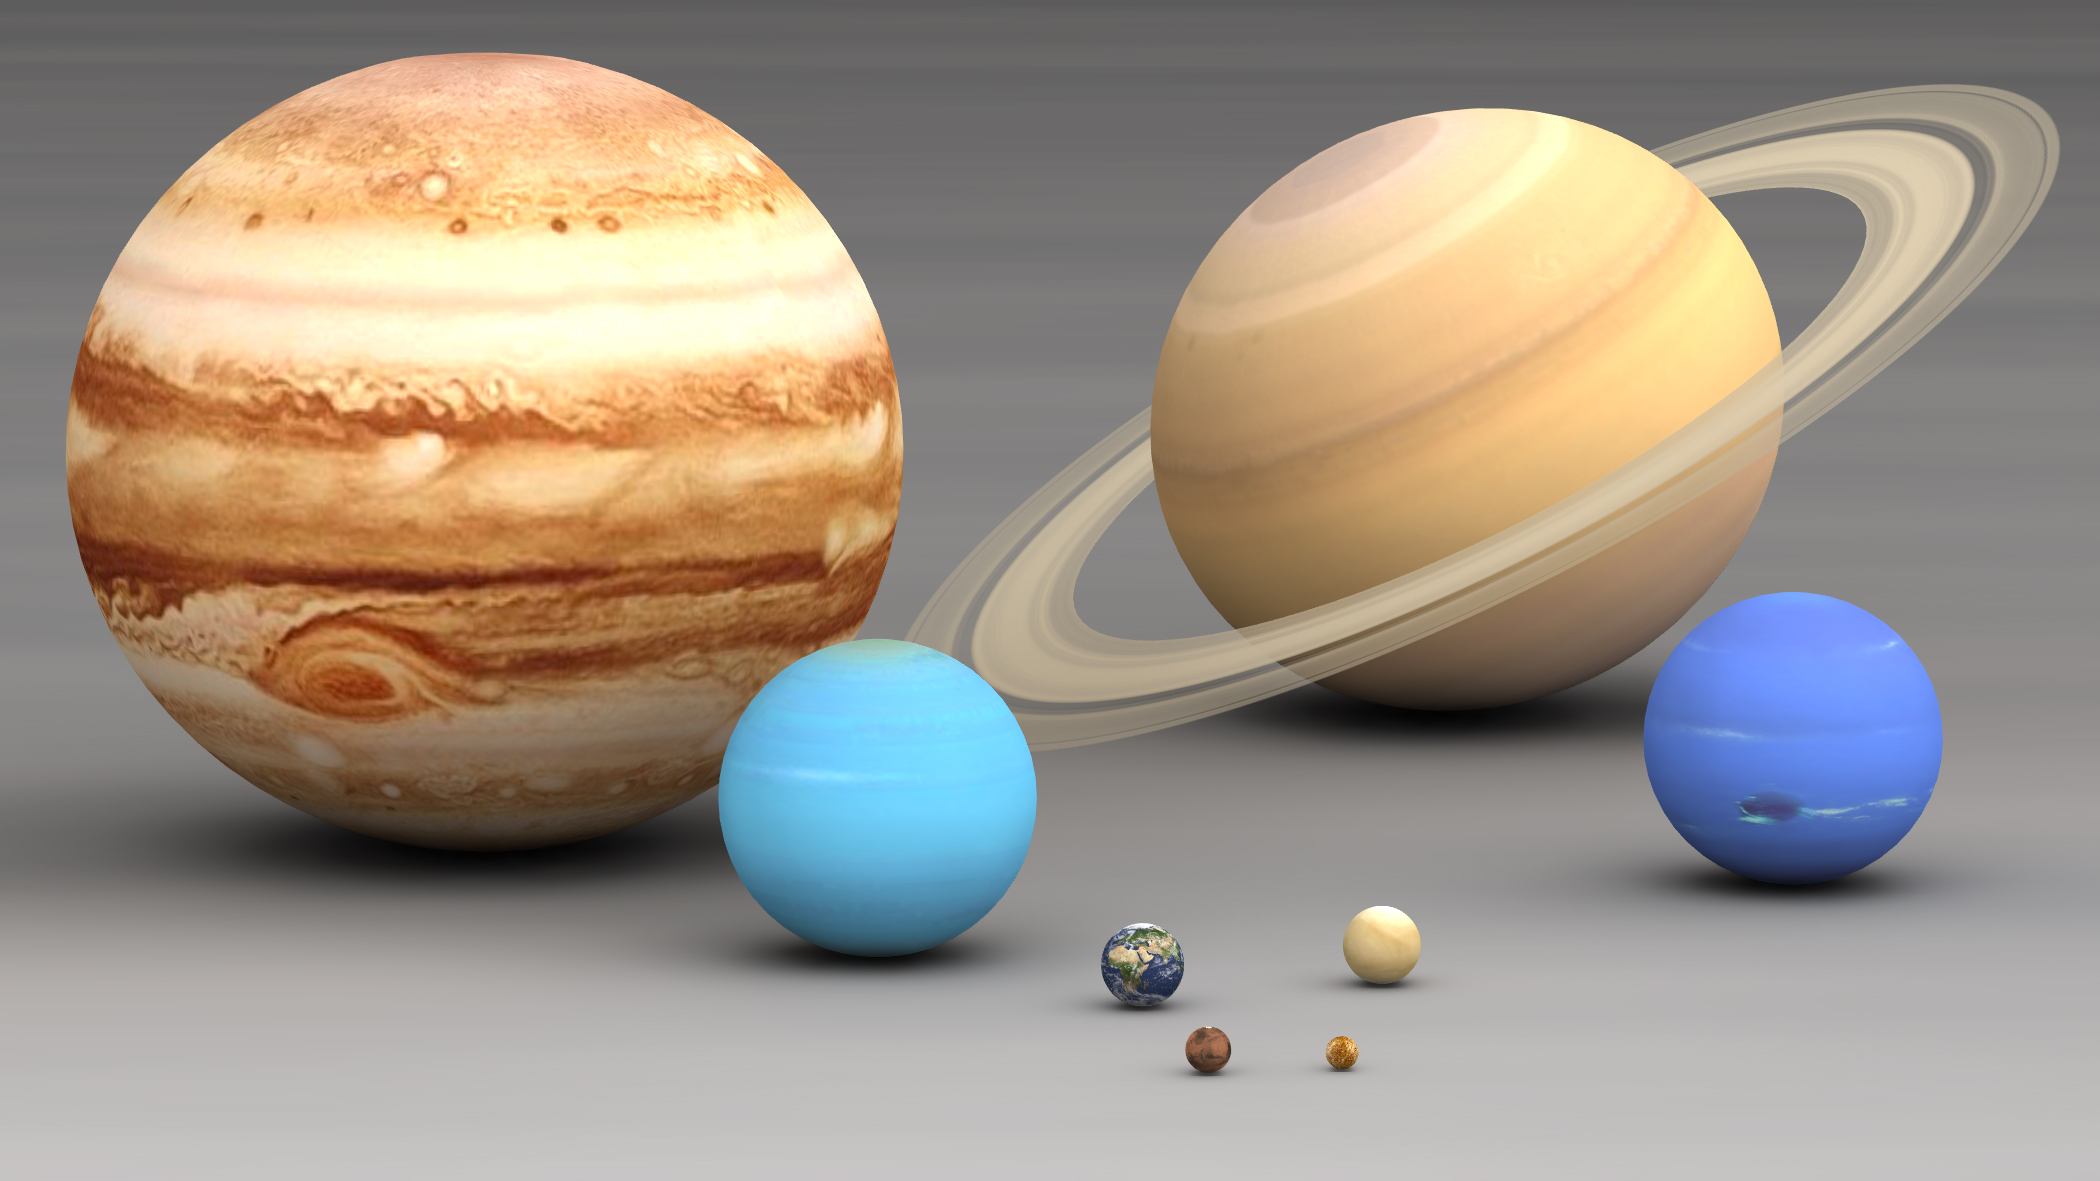 http://upload.wikimedia.org/wikipedia/commons/3/3c/Size_planets_comparison.jpg